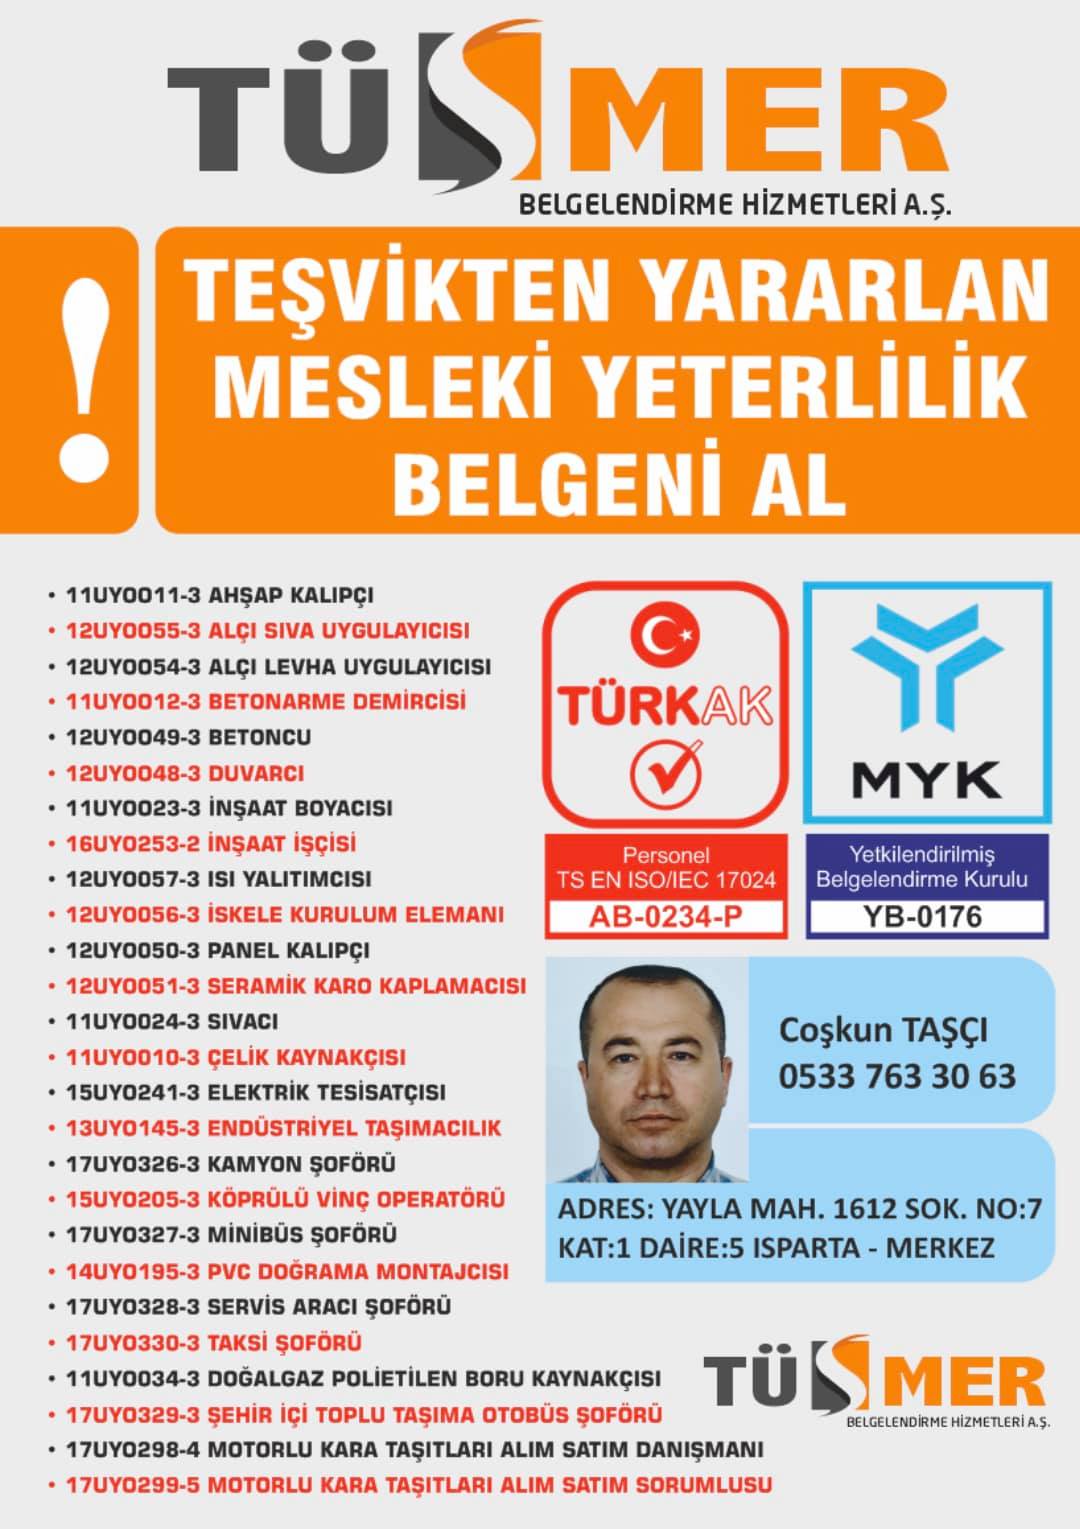 MYK MESLEKİ YETERLİLİK BELGESİ Esenkent Esenyurt İstanbul